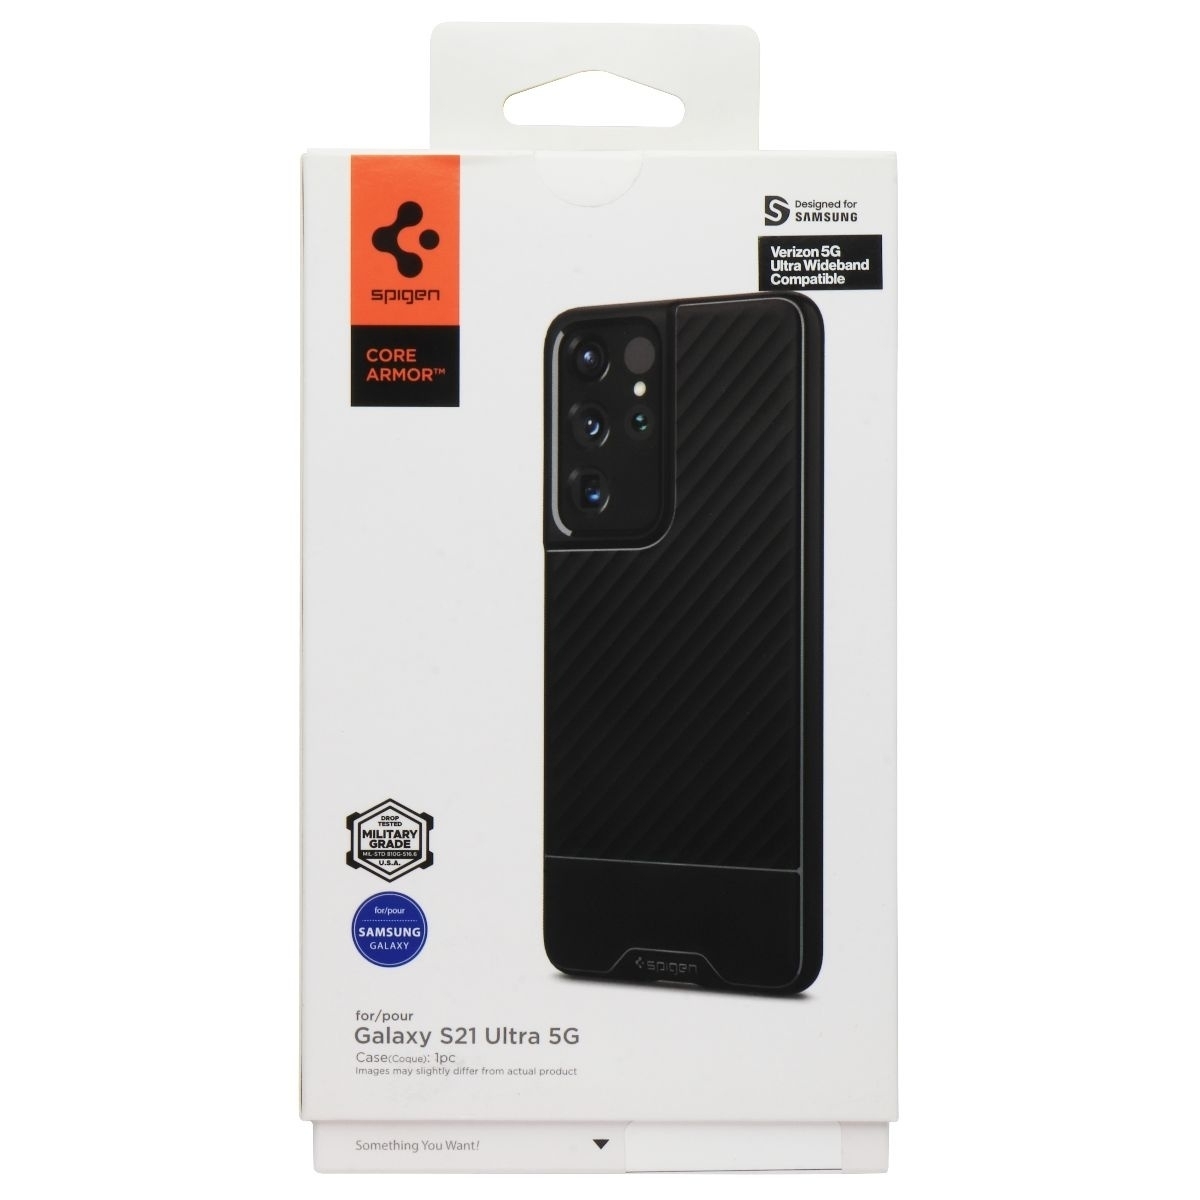 Spigen Core Armor Series Case For Samsung Galaxy S21 Ultra 5G - Black